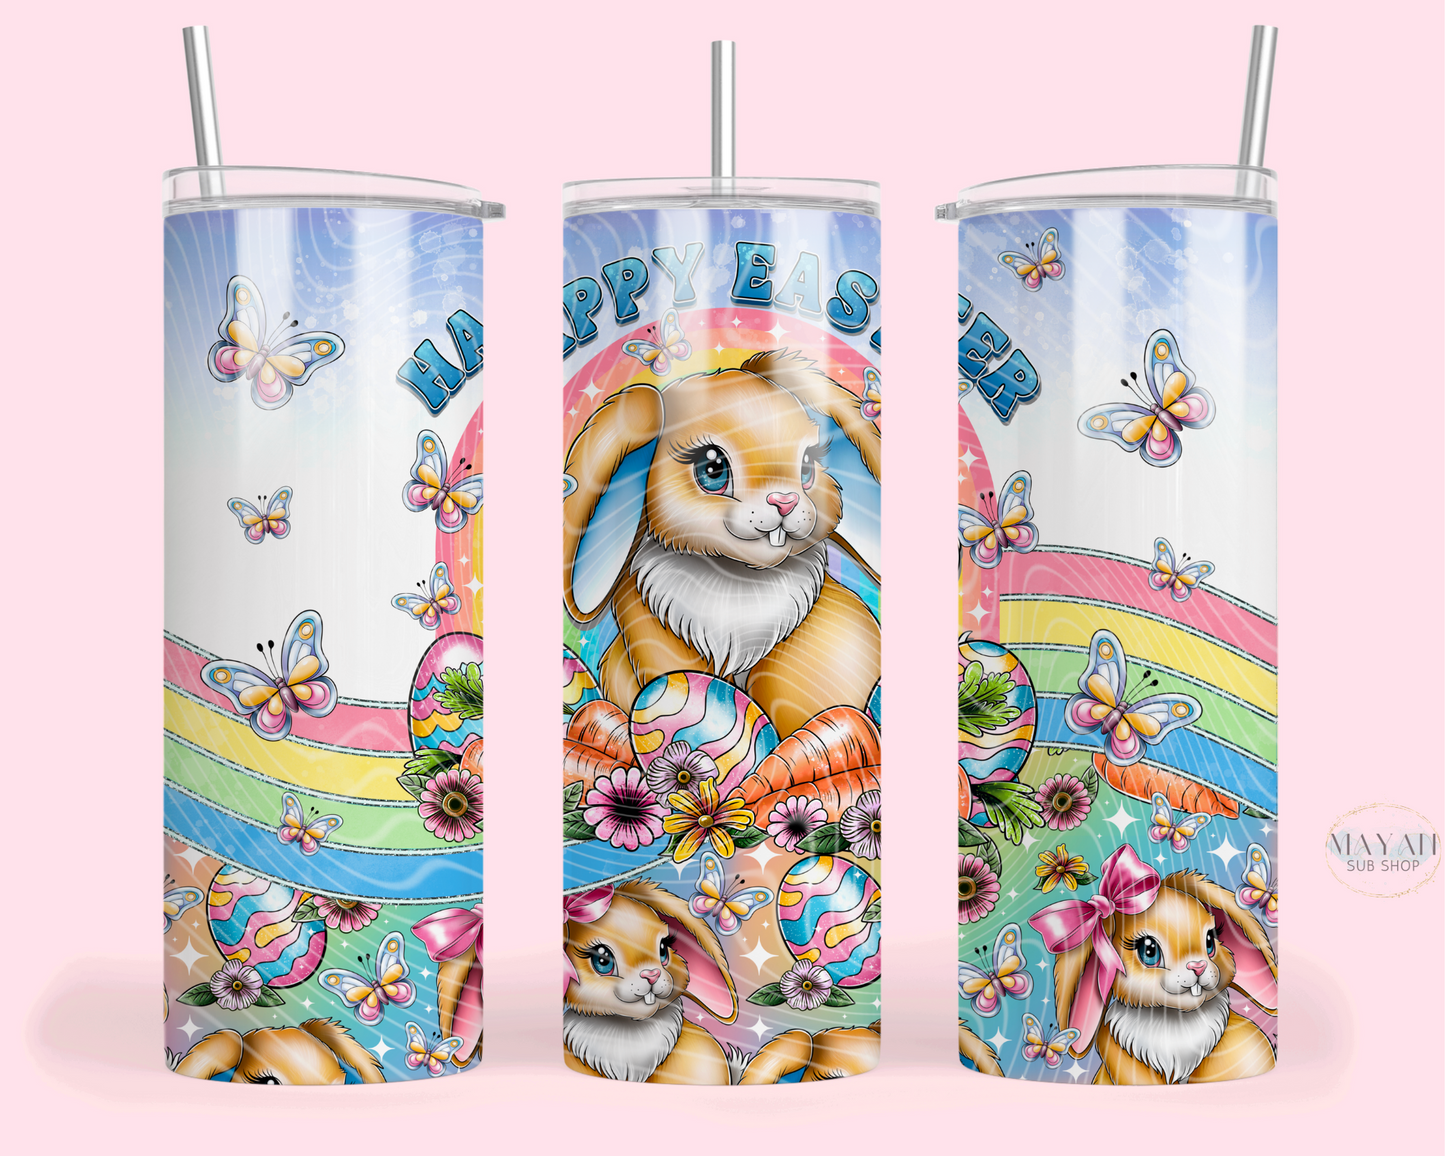 Happy Easter Bunny Tumbler - Mayan Sub Shop